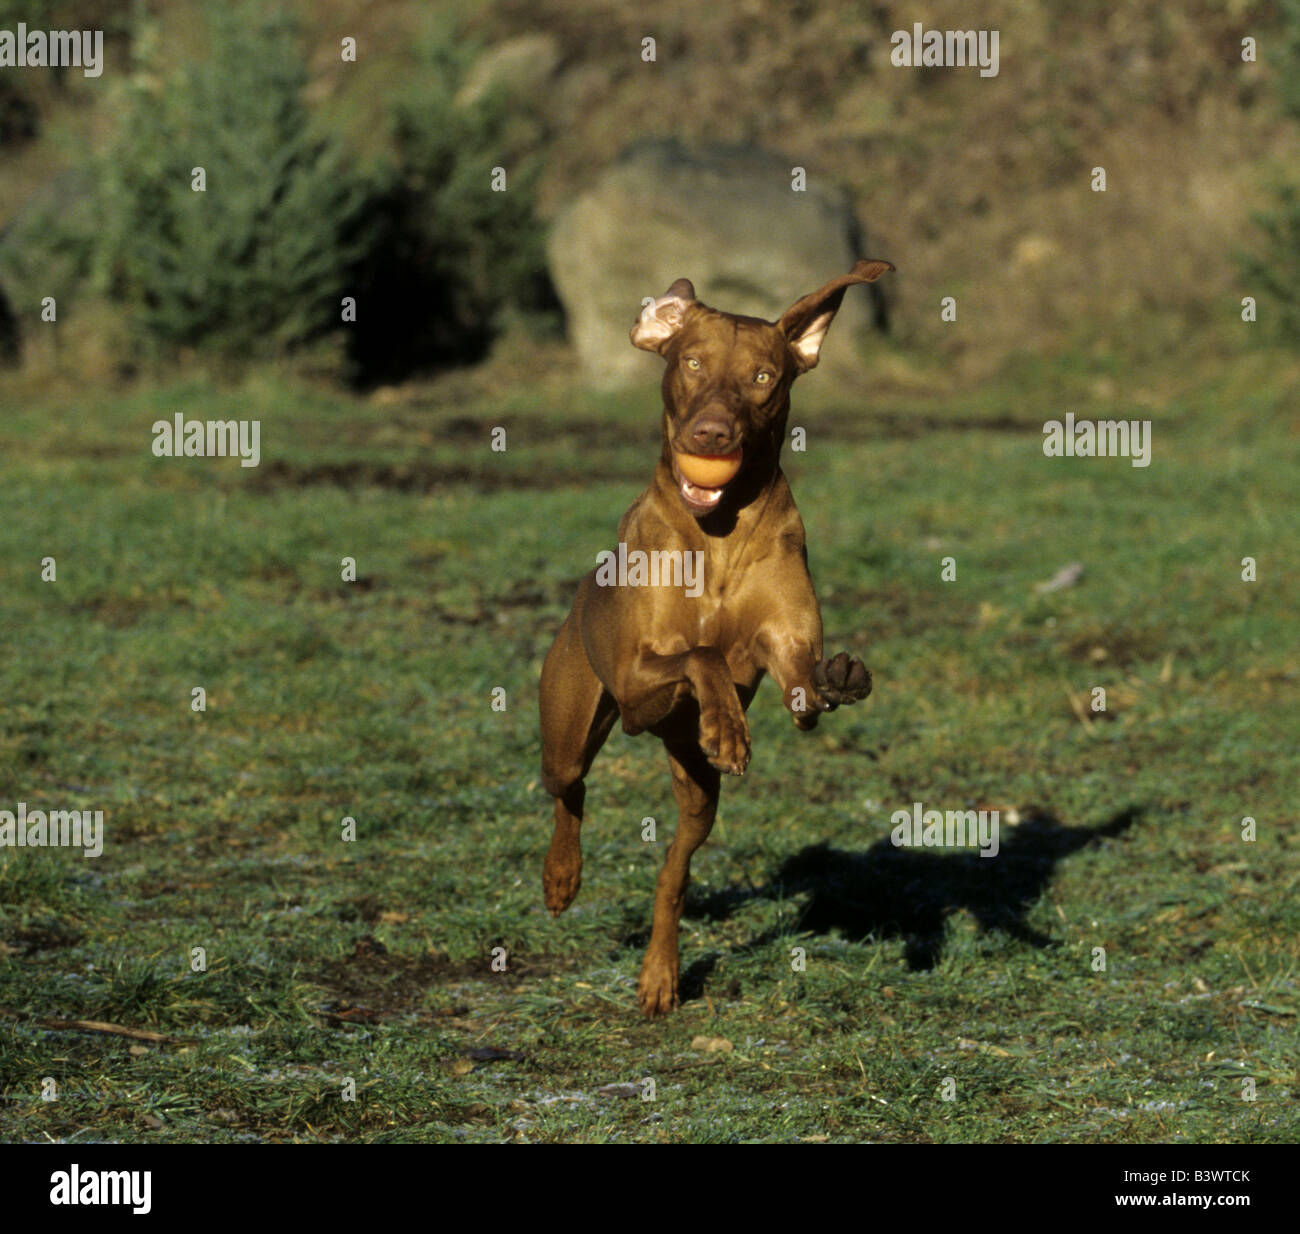 Vizsla dog carrying a ball and running Stock Photo